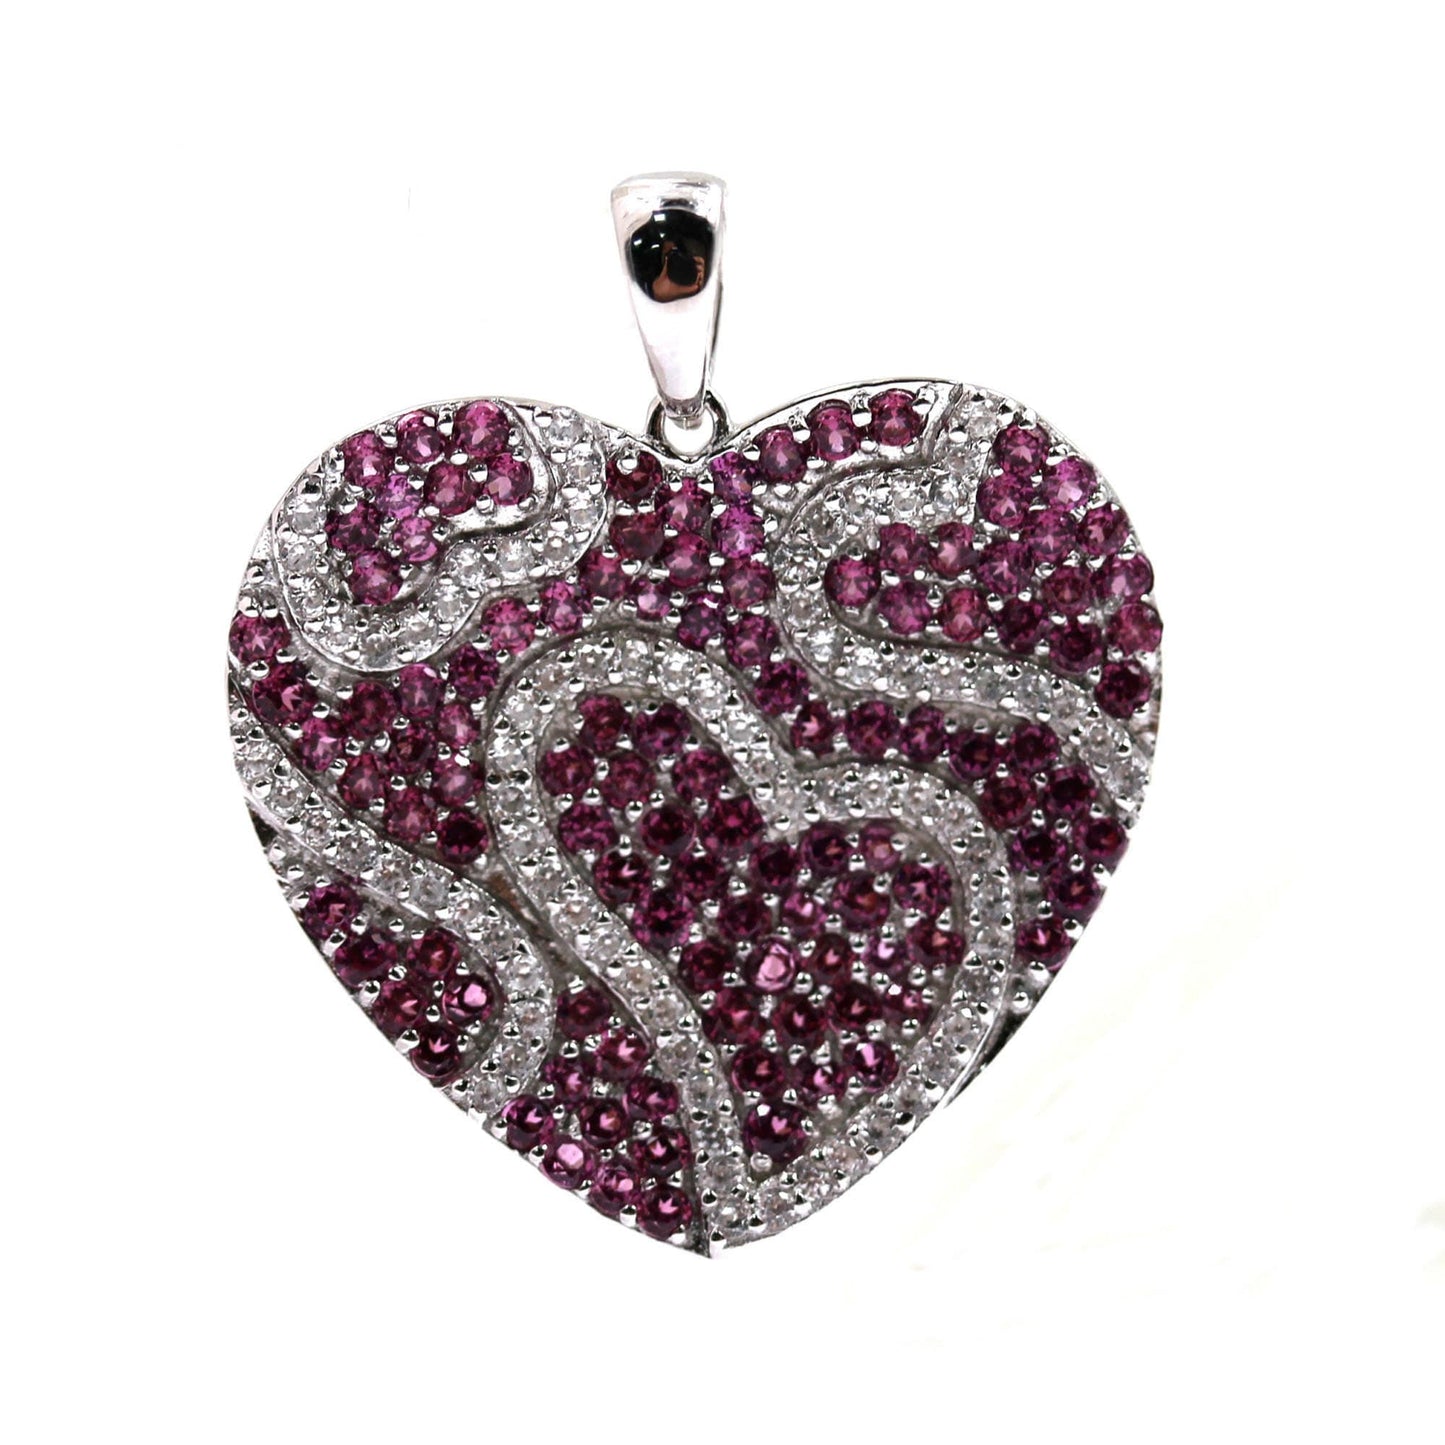 Natural Rhodolite Garnet With White Zircon Gemstone Pendant, 925 Sterling Silver Heart Shaped Pendant, Anniversary Gift, Gift For Her